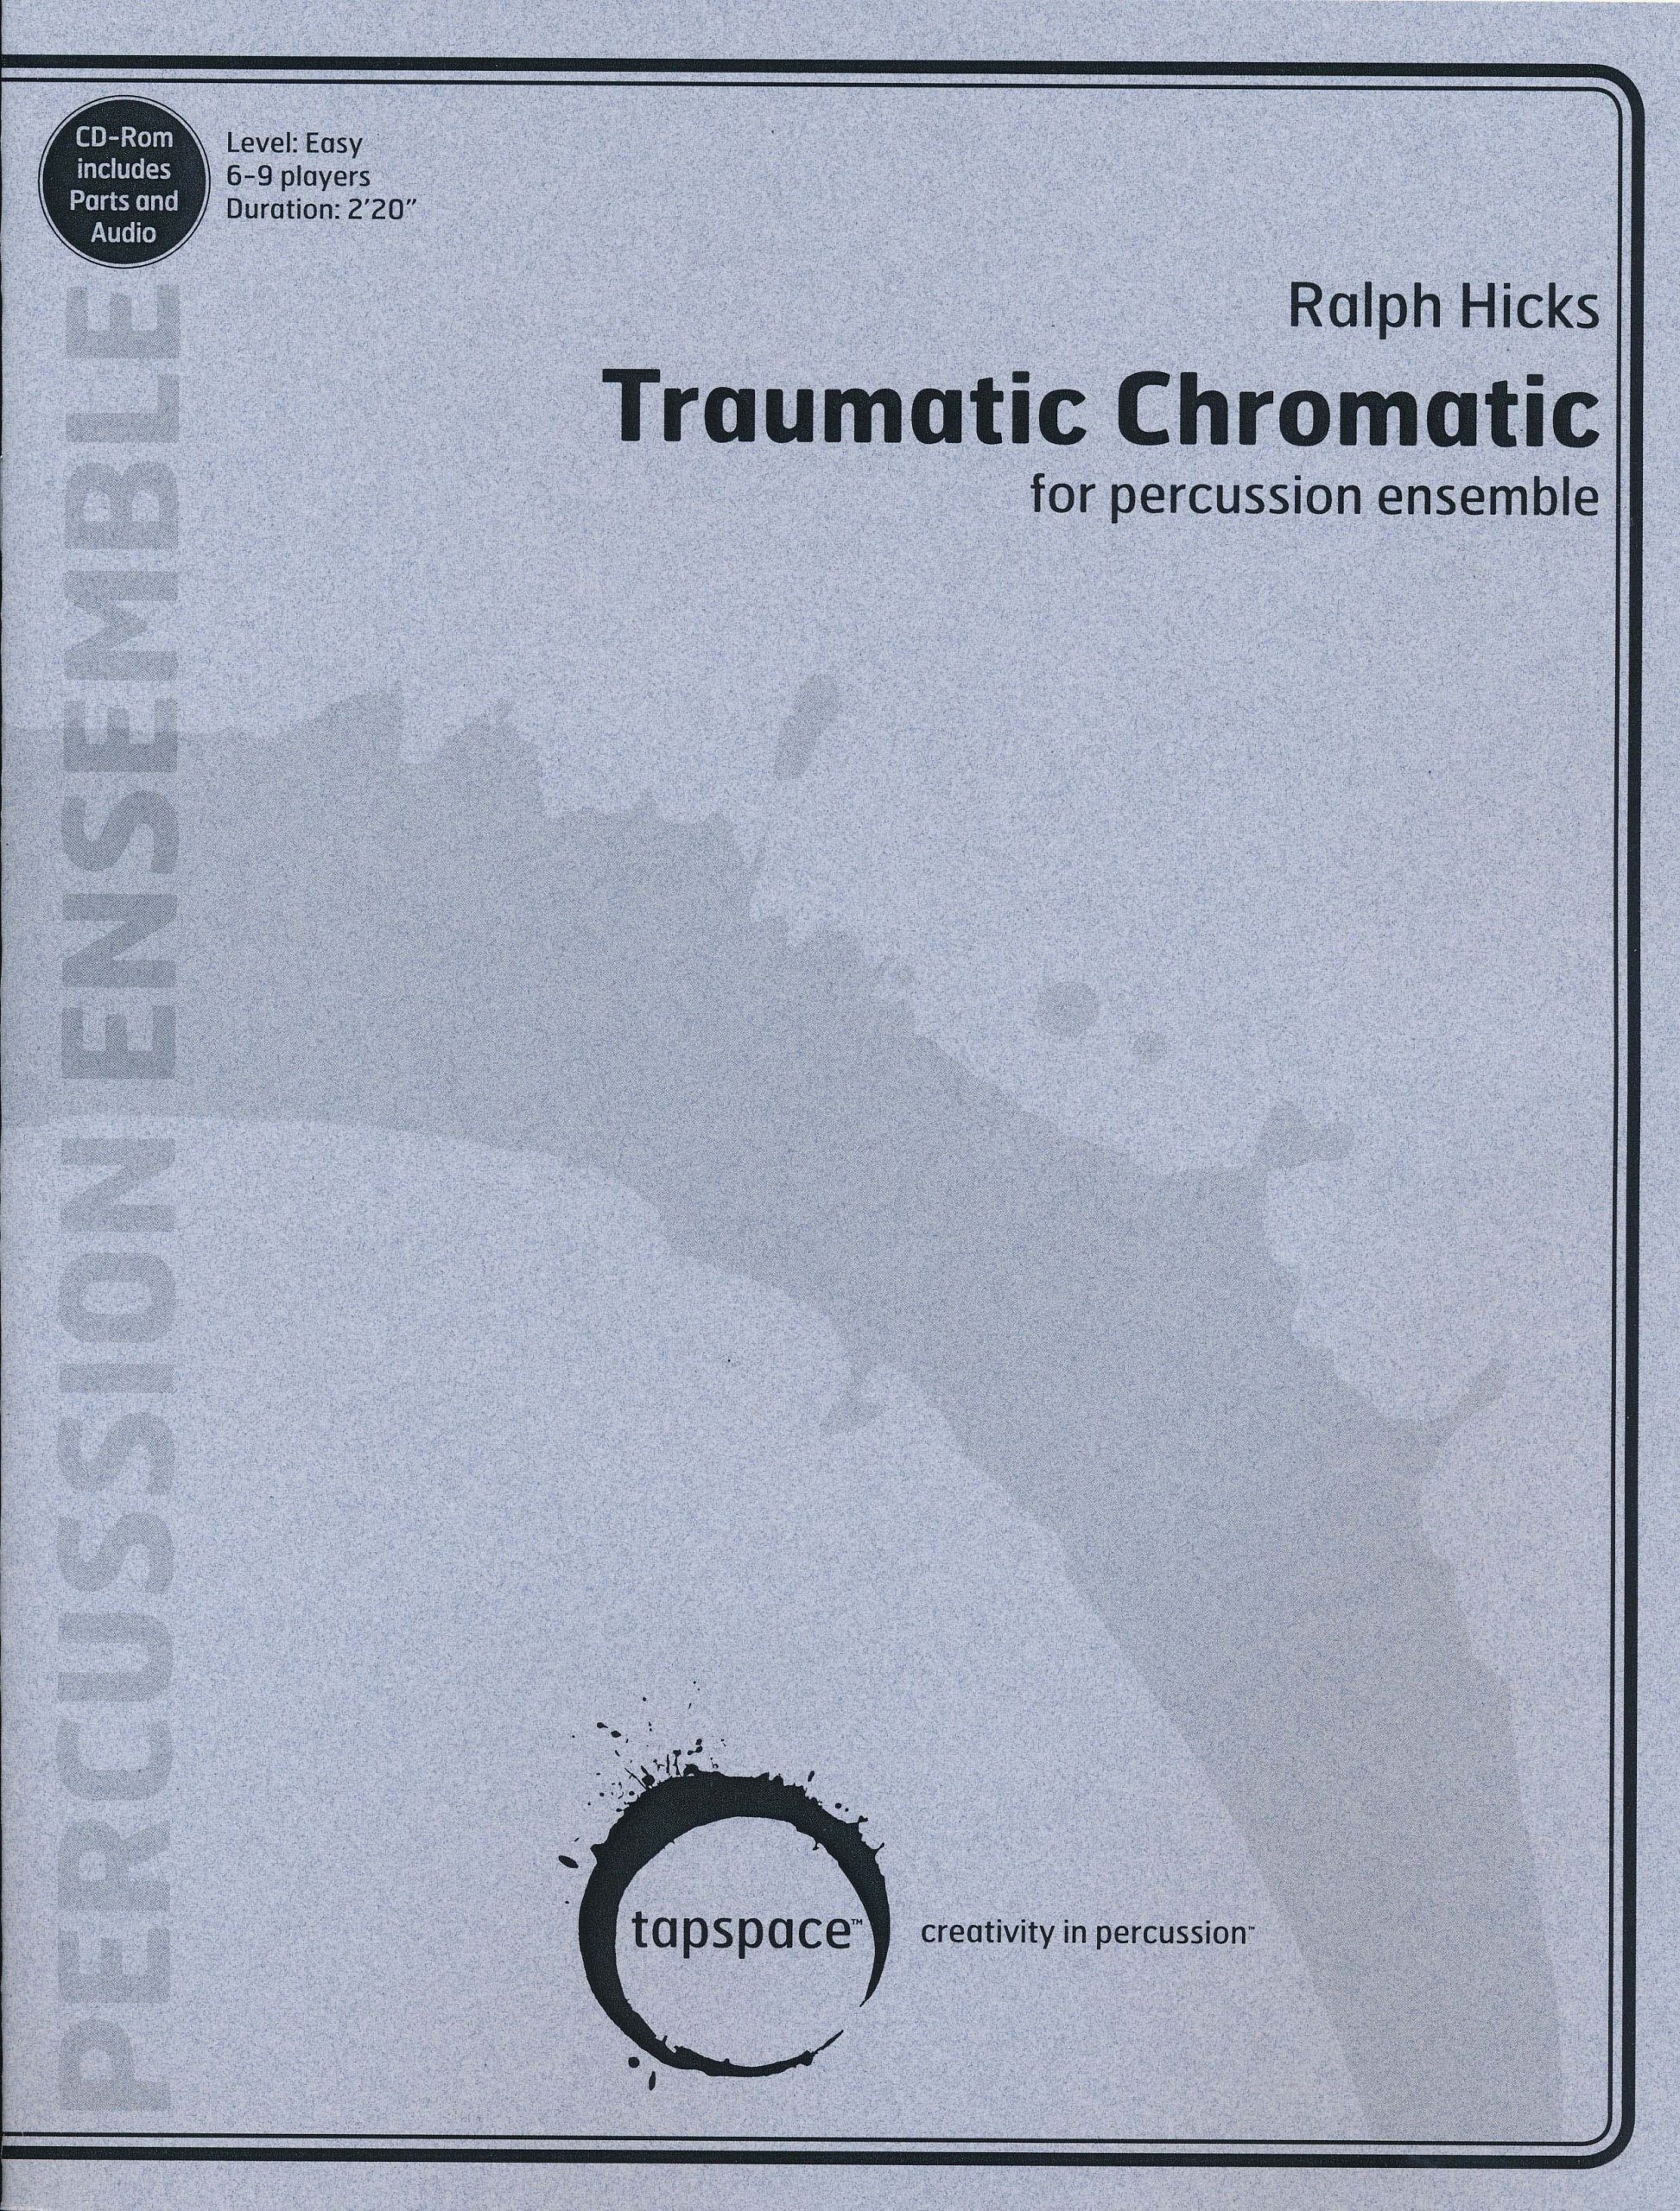 Traumatic Chromatic by Ralph Hicks